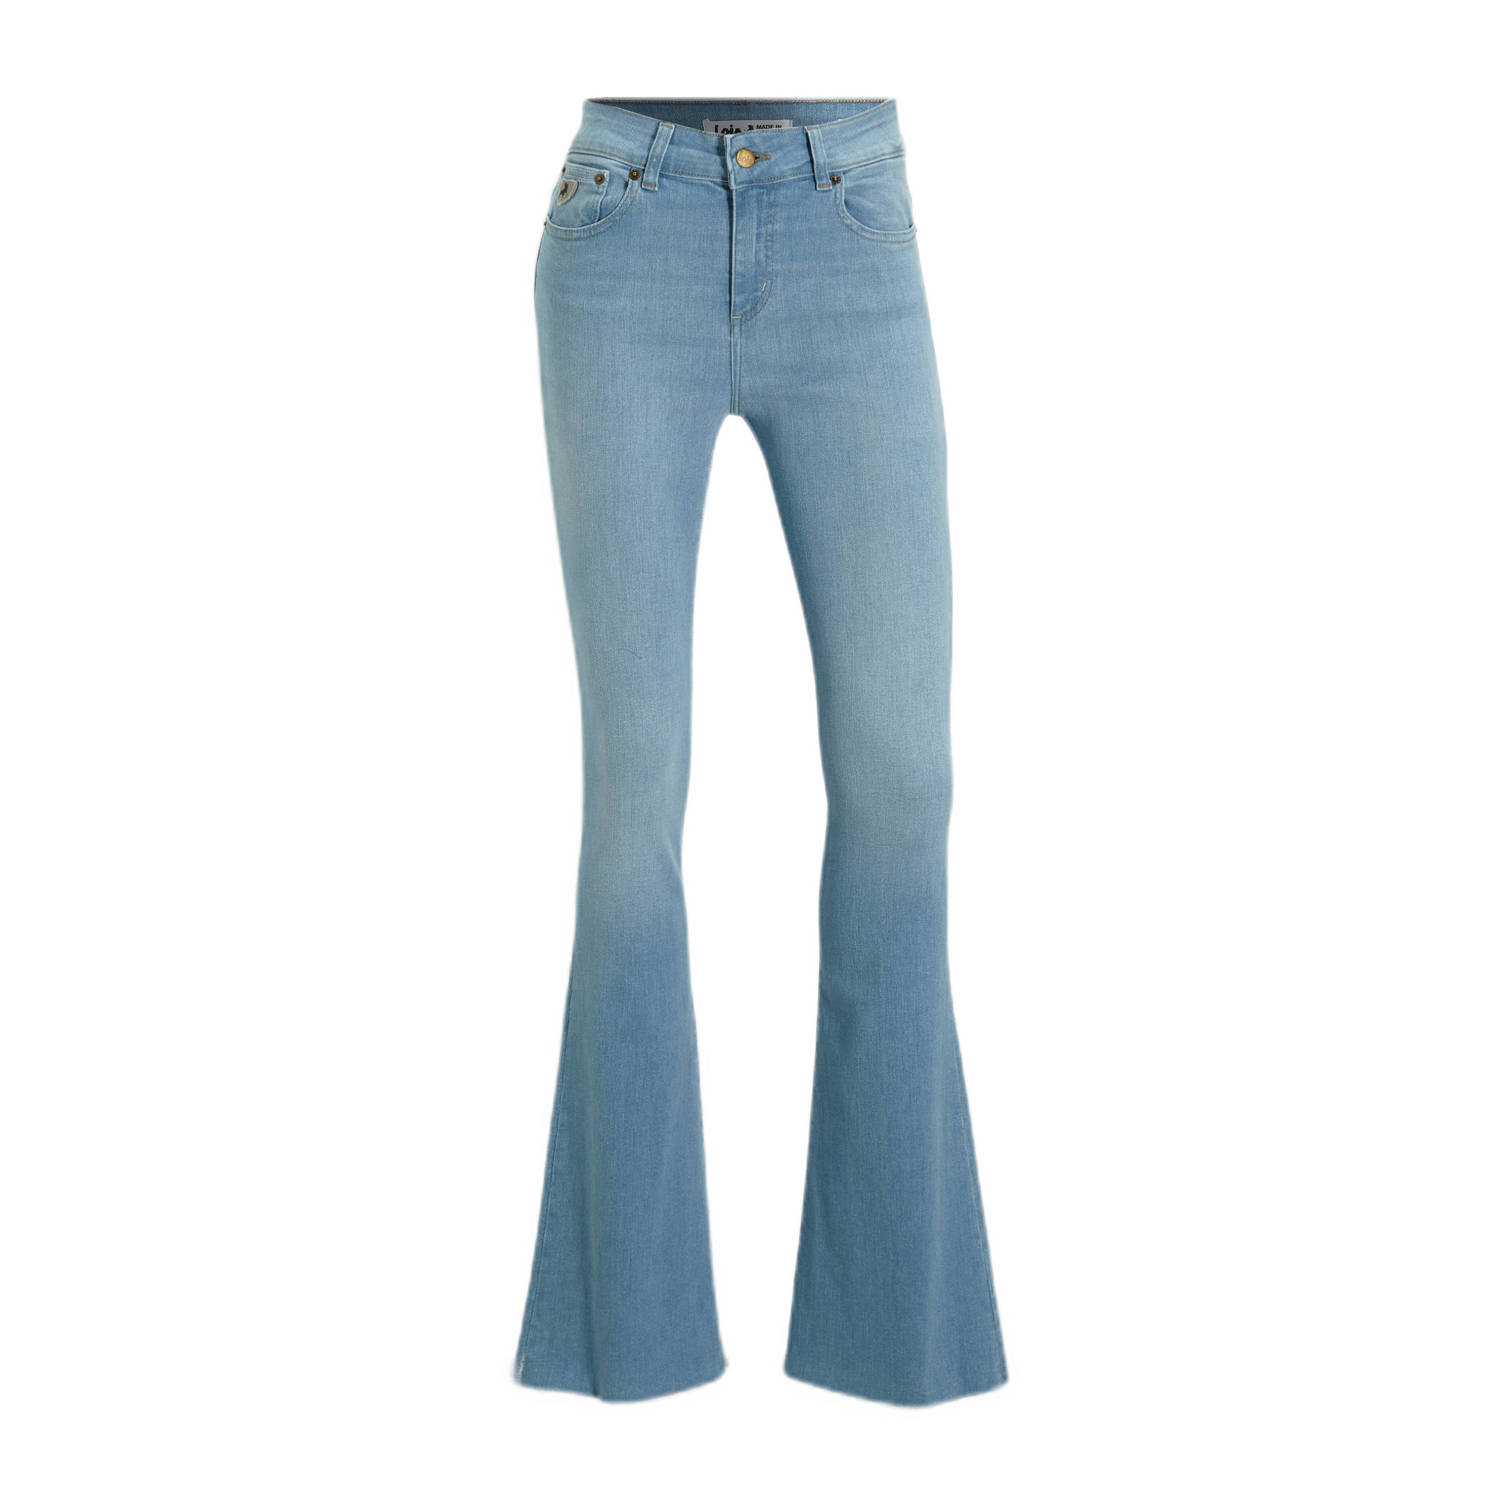 Lois flared jeans Raval Edge summer stone